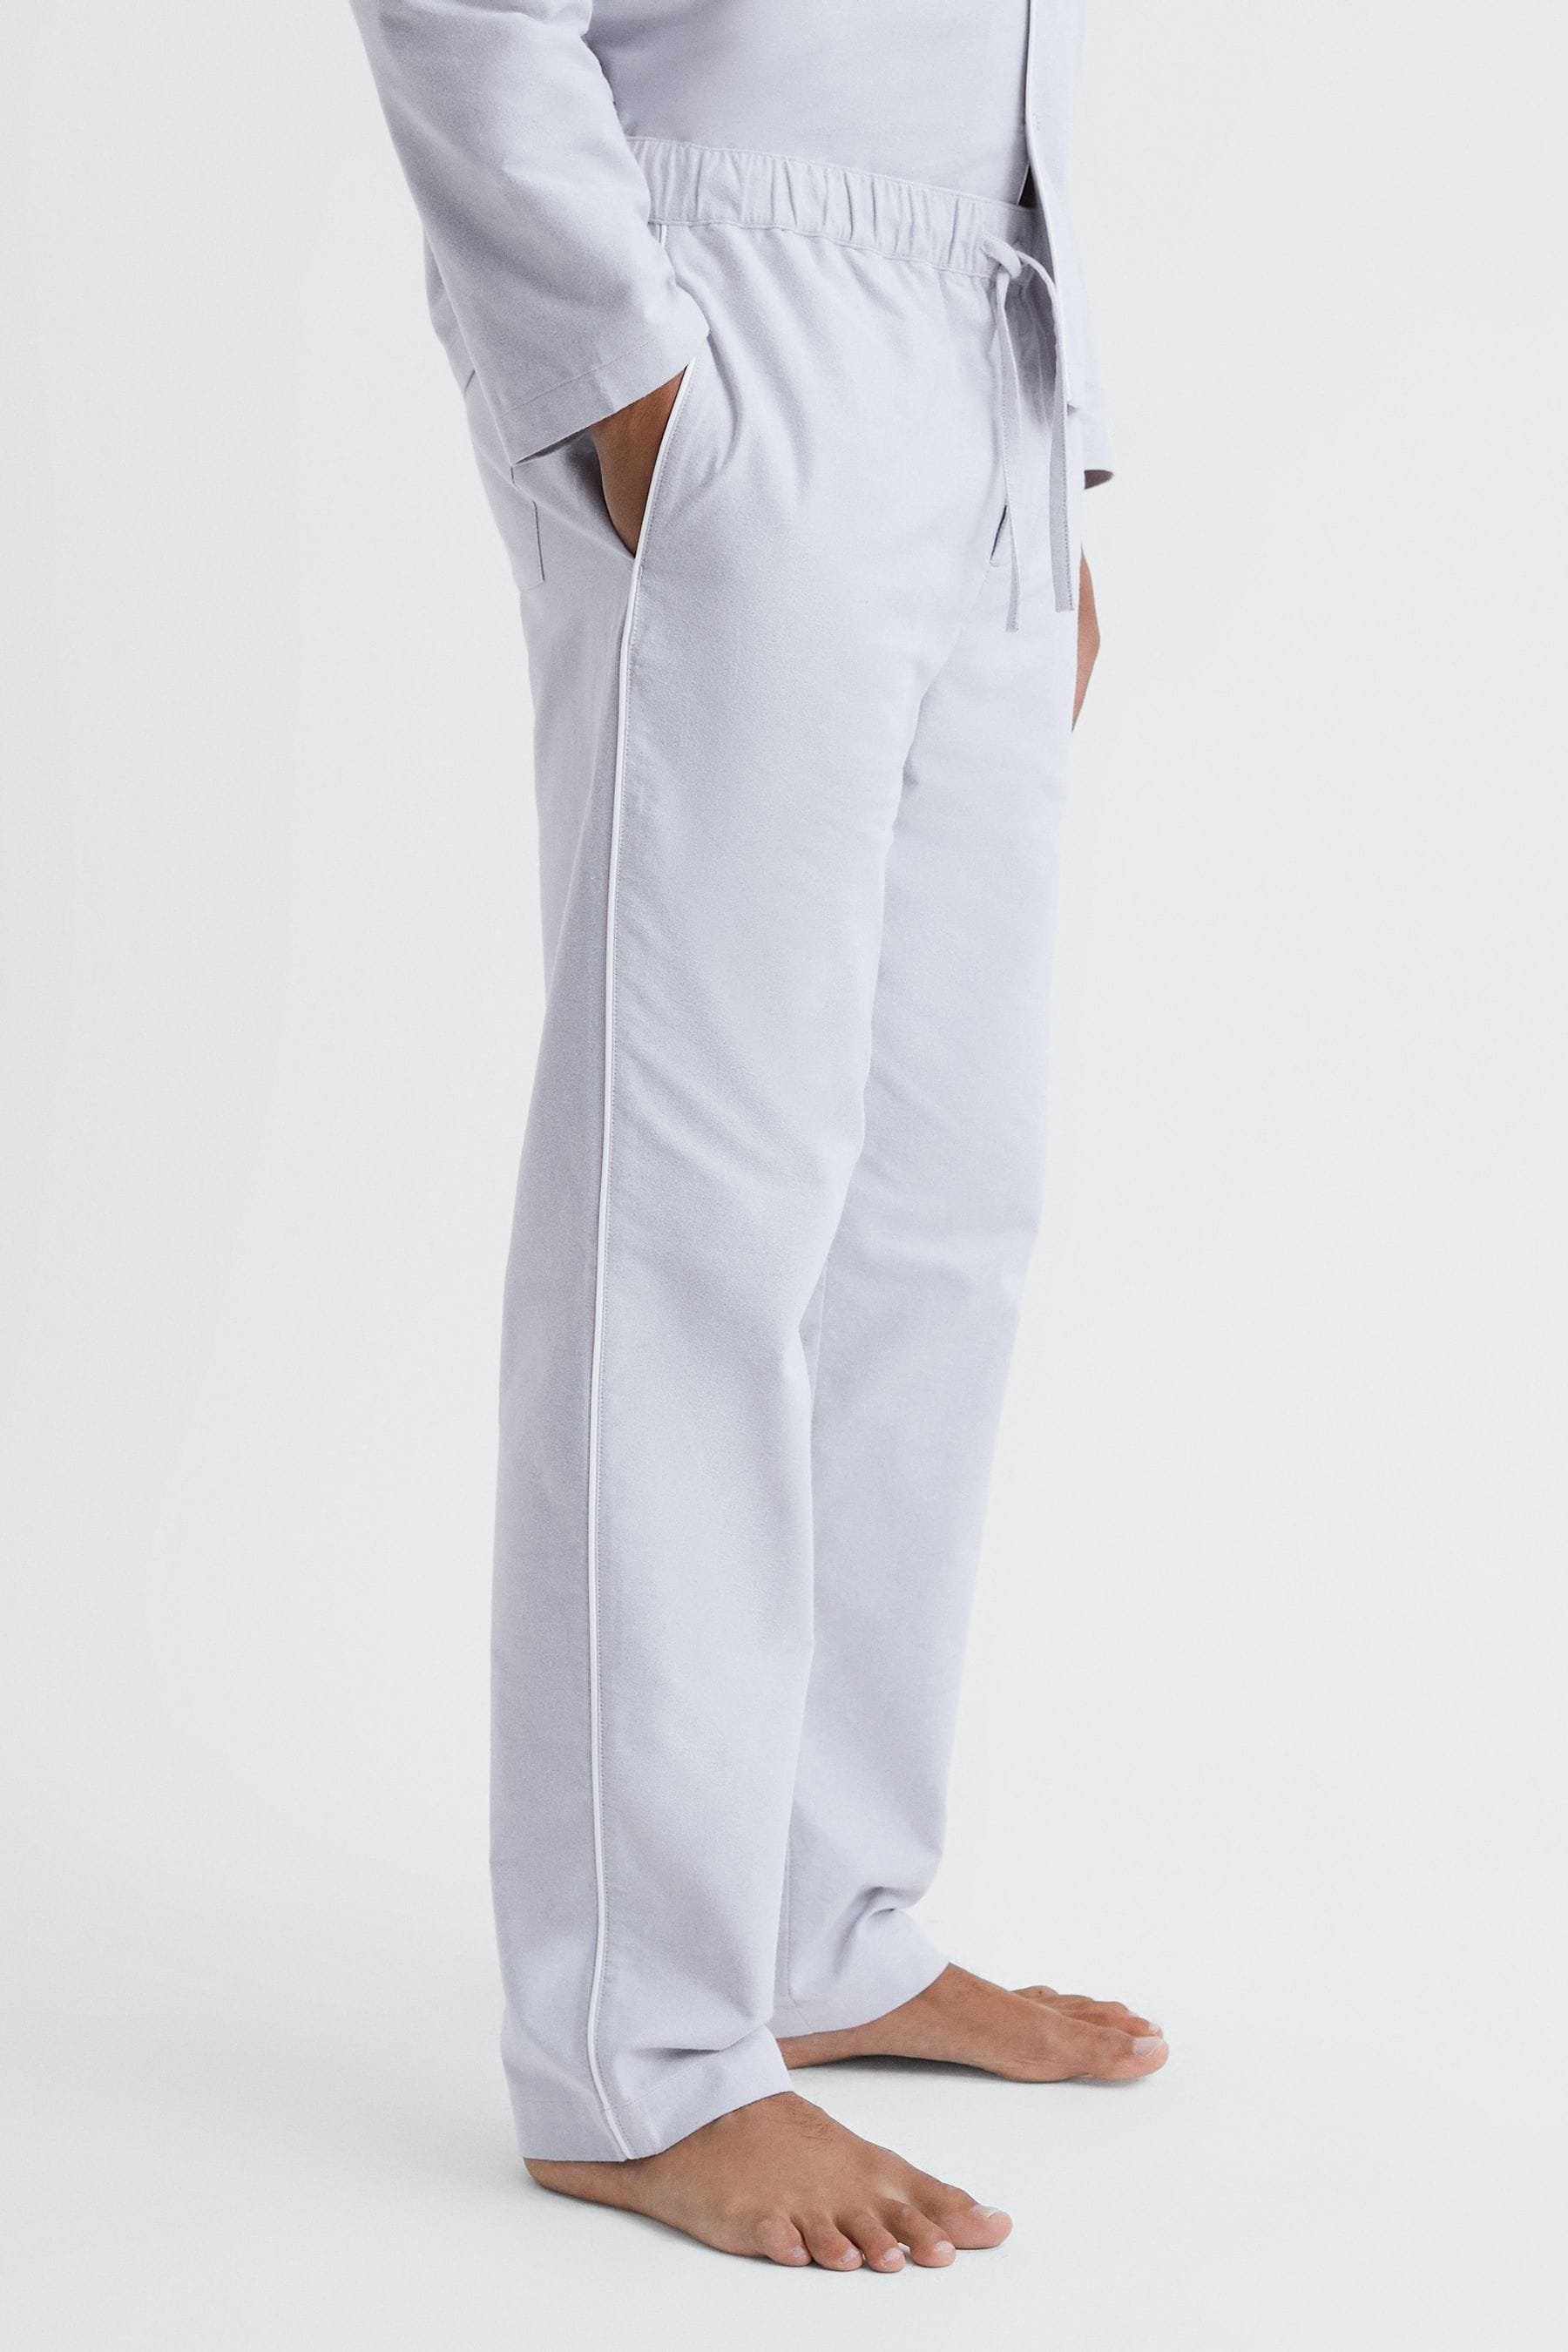 Reiss Farley - Ice Grey Cotton Drawstring Pyjama Bottoms, Xl